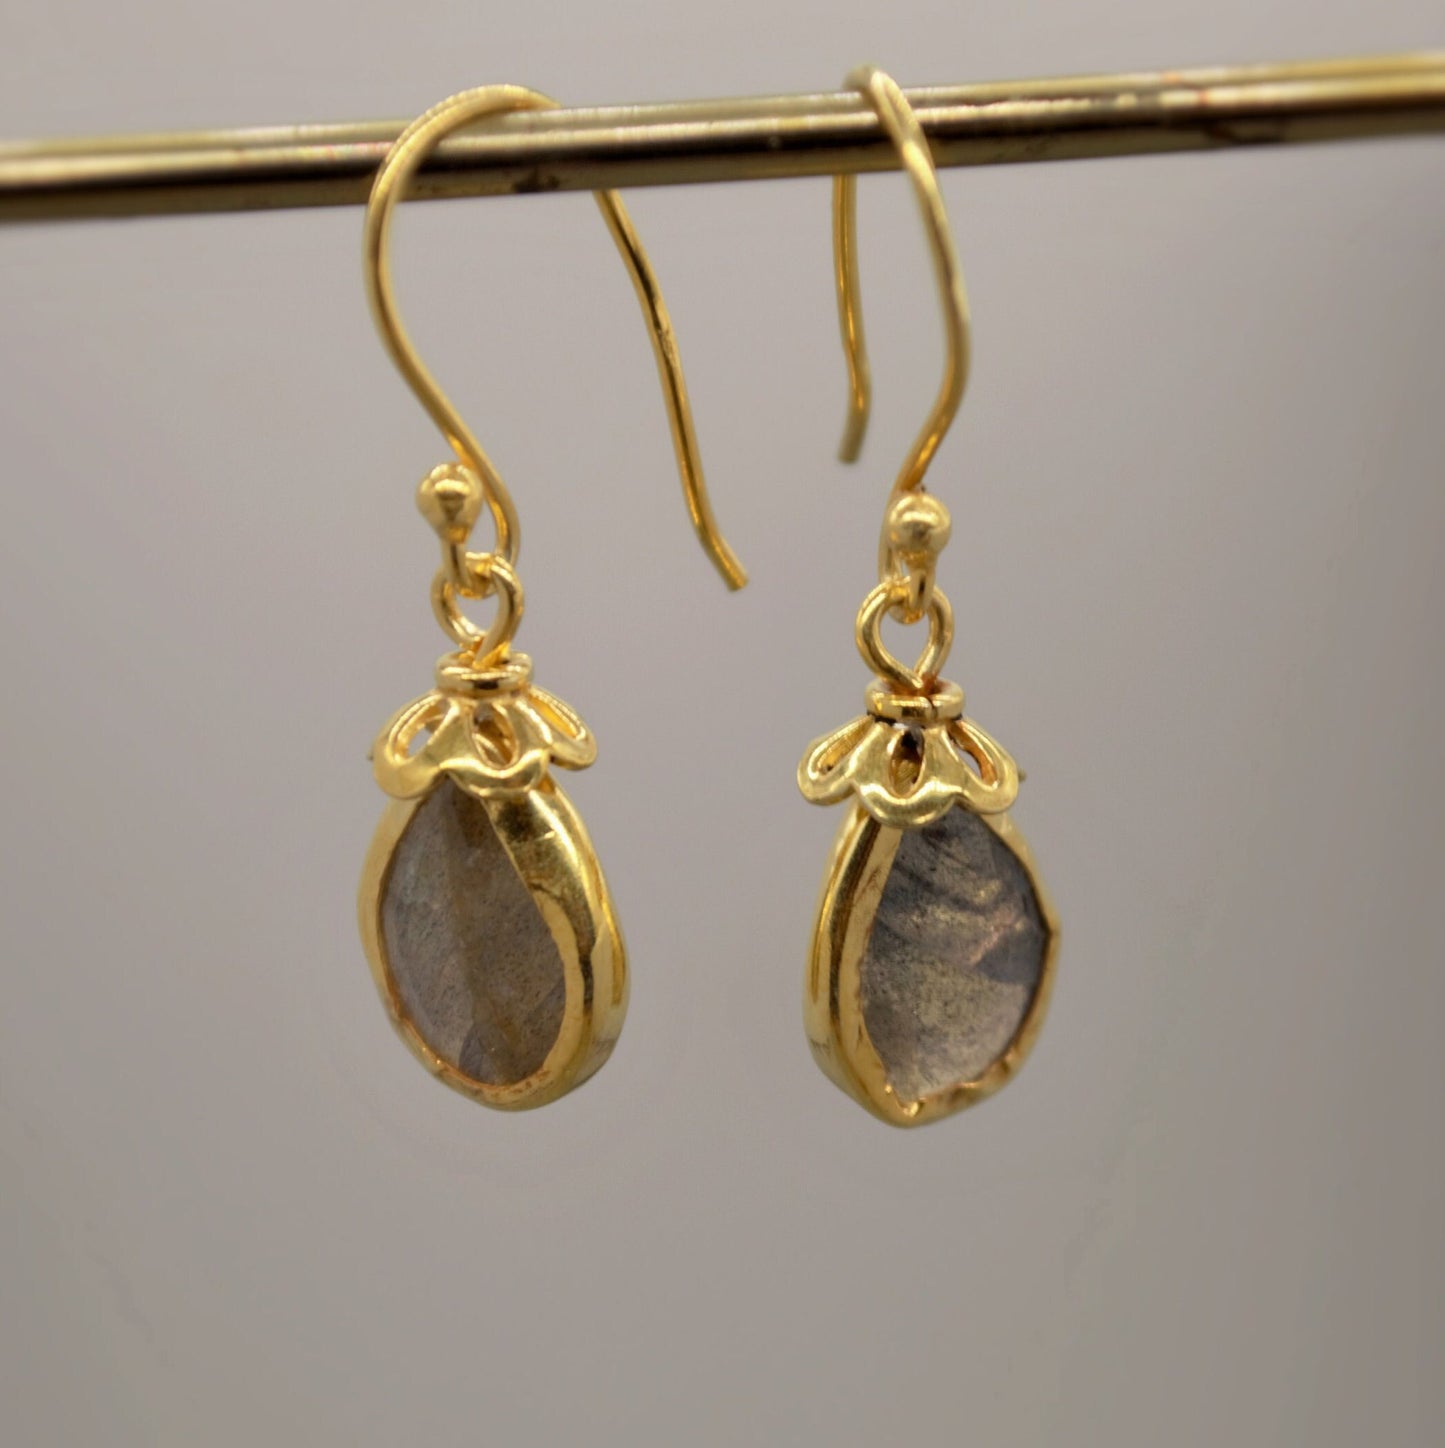 Labradorite Dangle Silver Earrings, Gold Plated Sterling Silver, Handmade Gemstone Earrings, Labradorite Stone Jewelry, Gift For Her